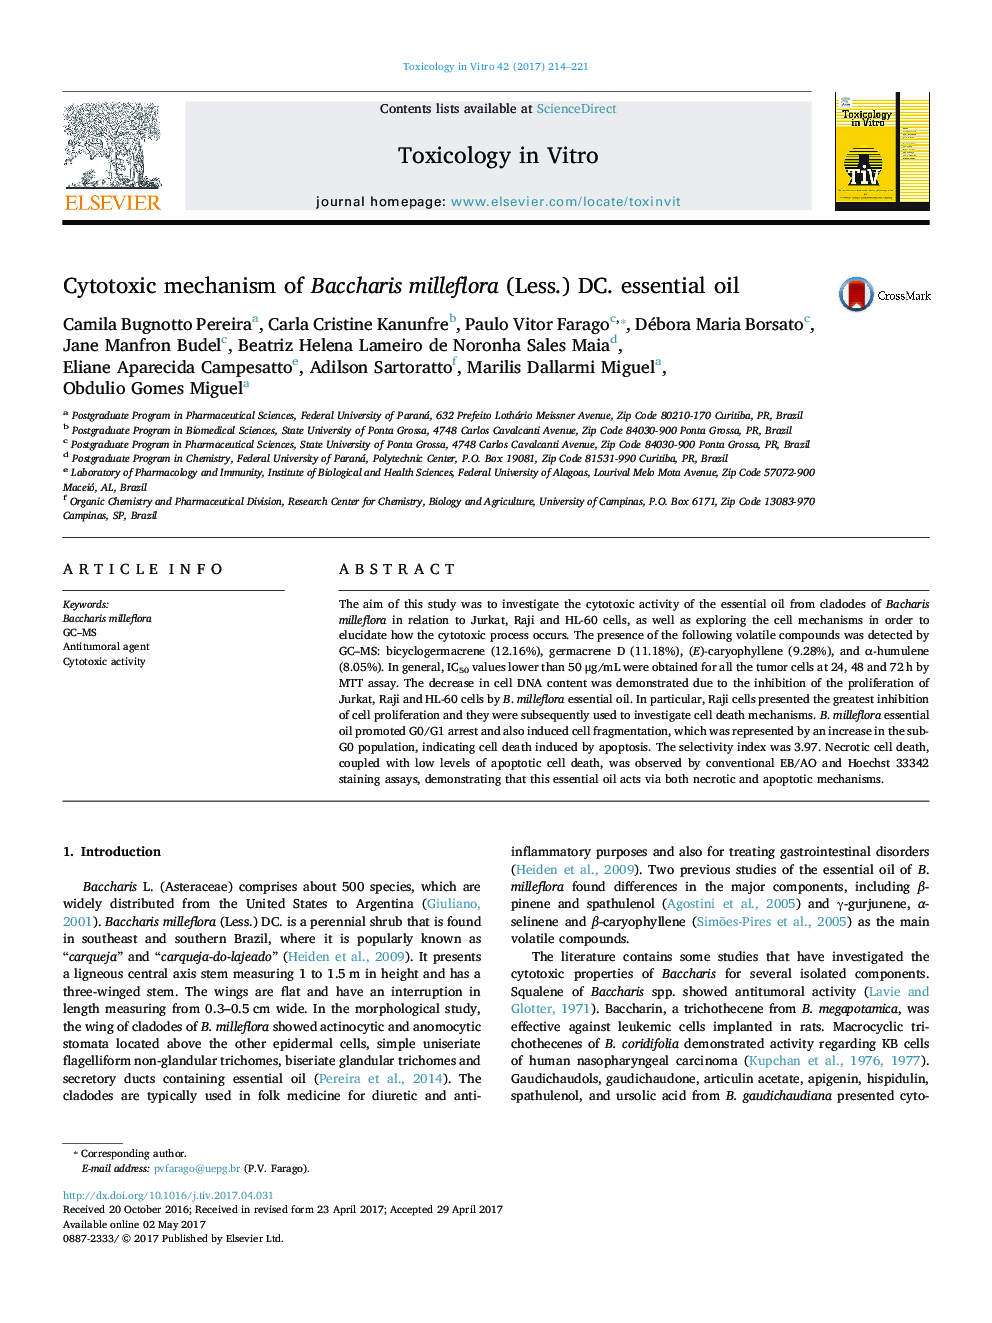 Cytotoxic mechanism of Baccharis milleflora (Less.) DC. essential oil